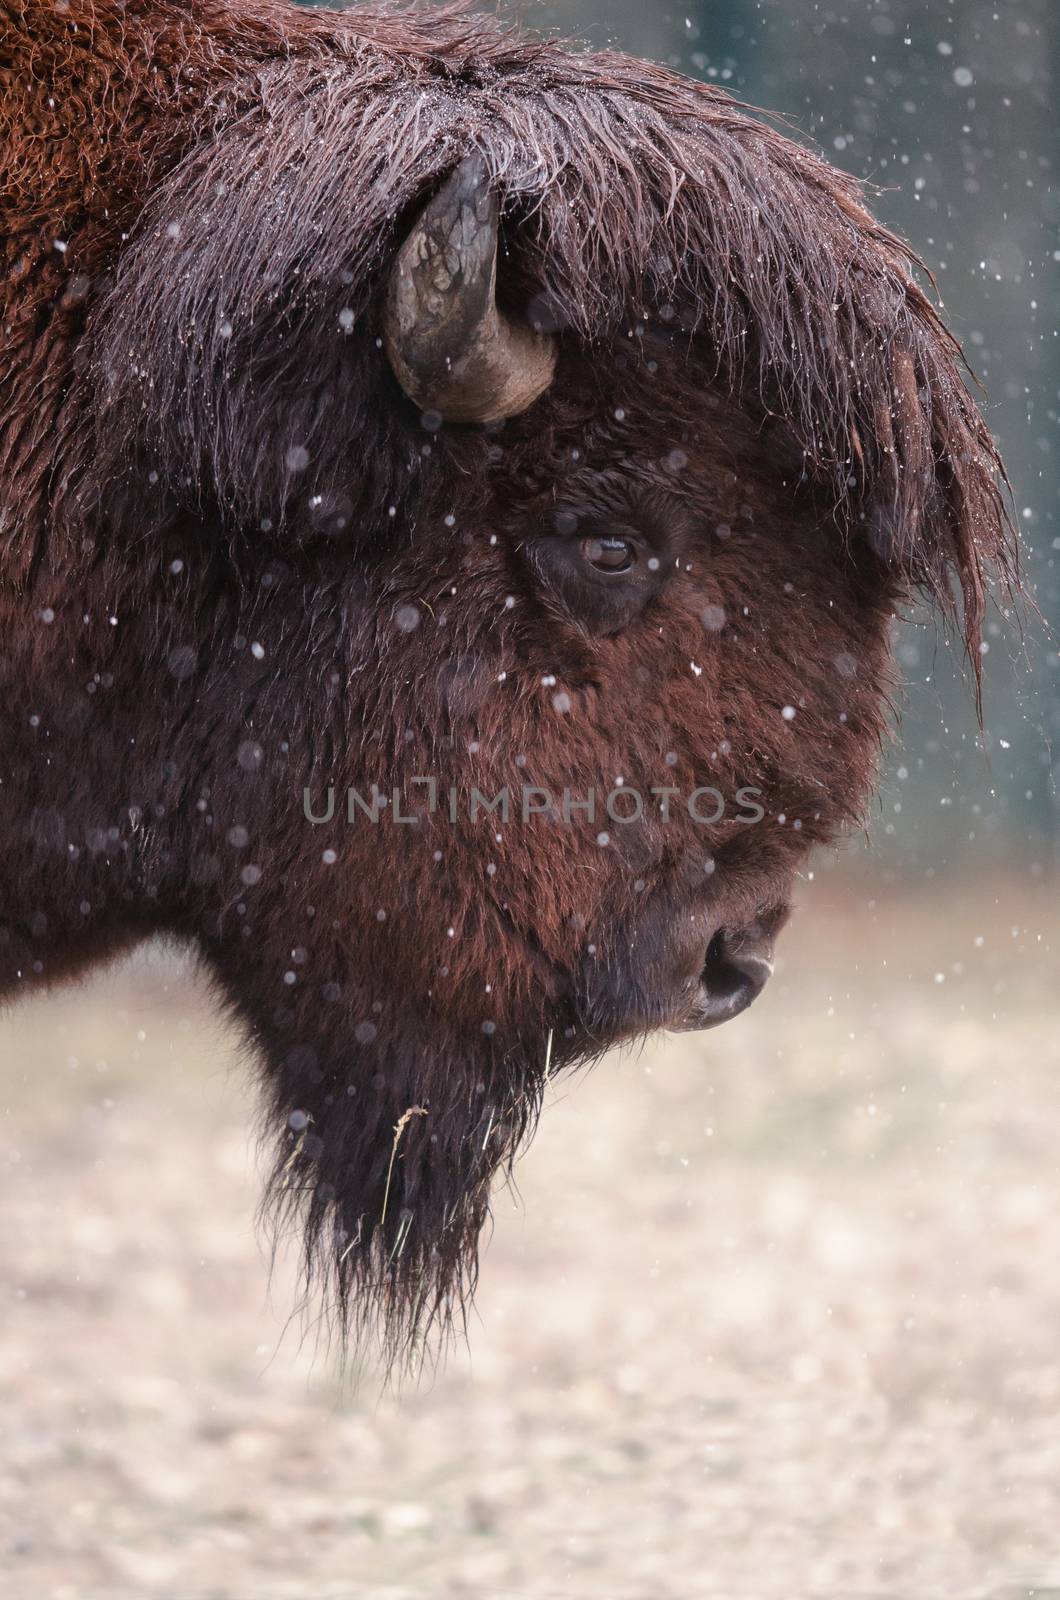 American bison portrait by ozkanzozmen